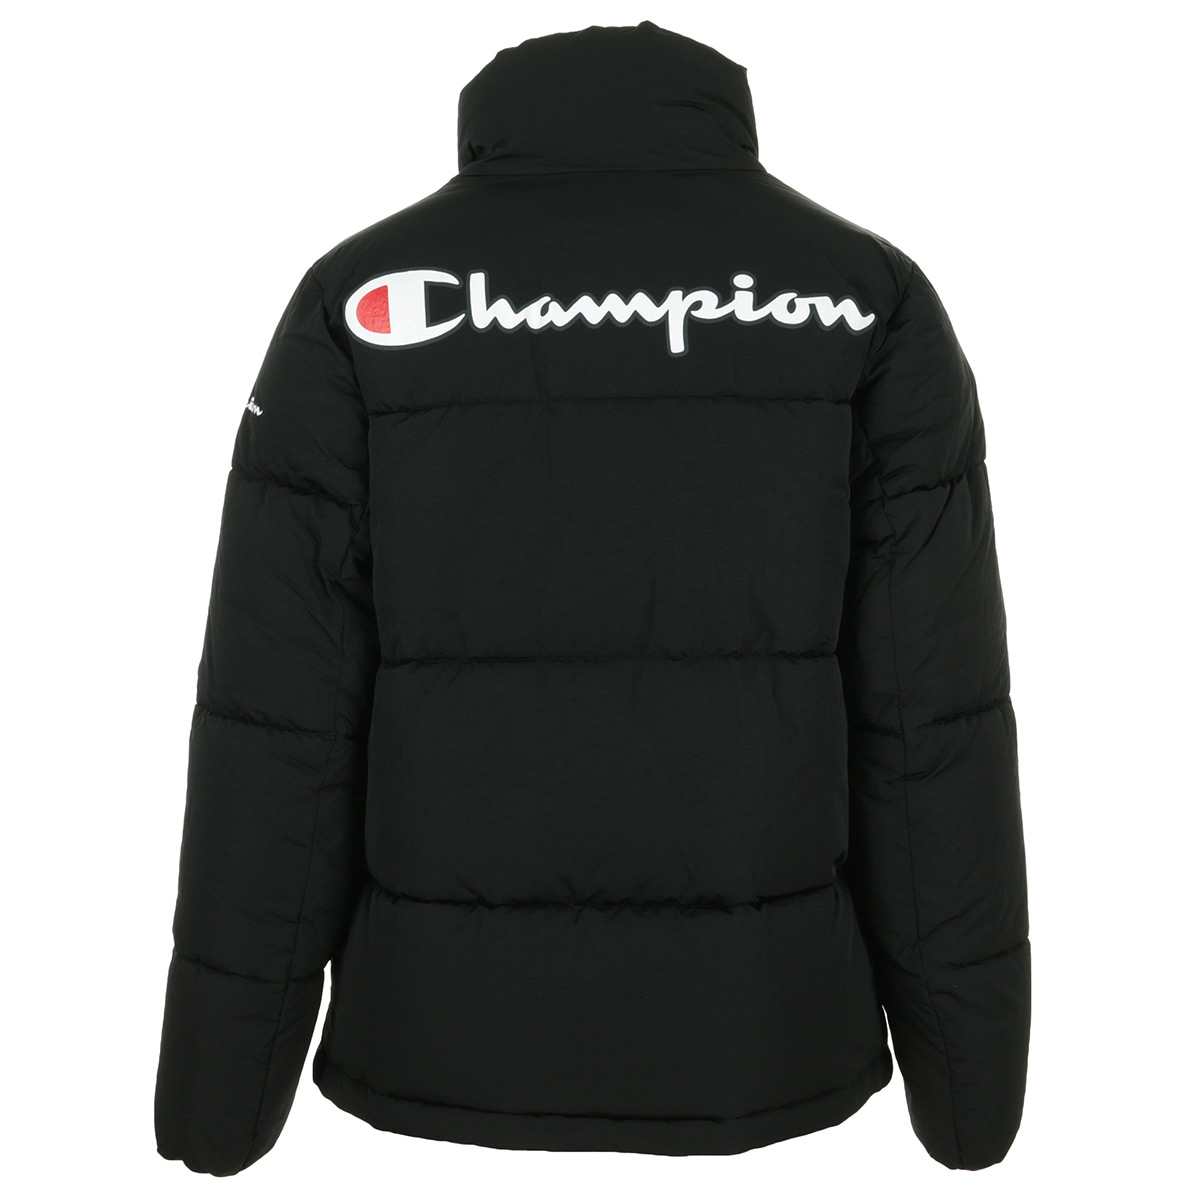 Champion Jacket